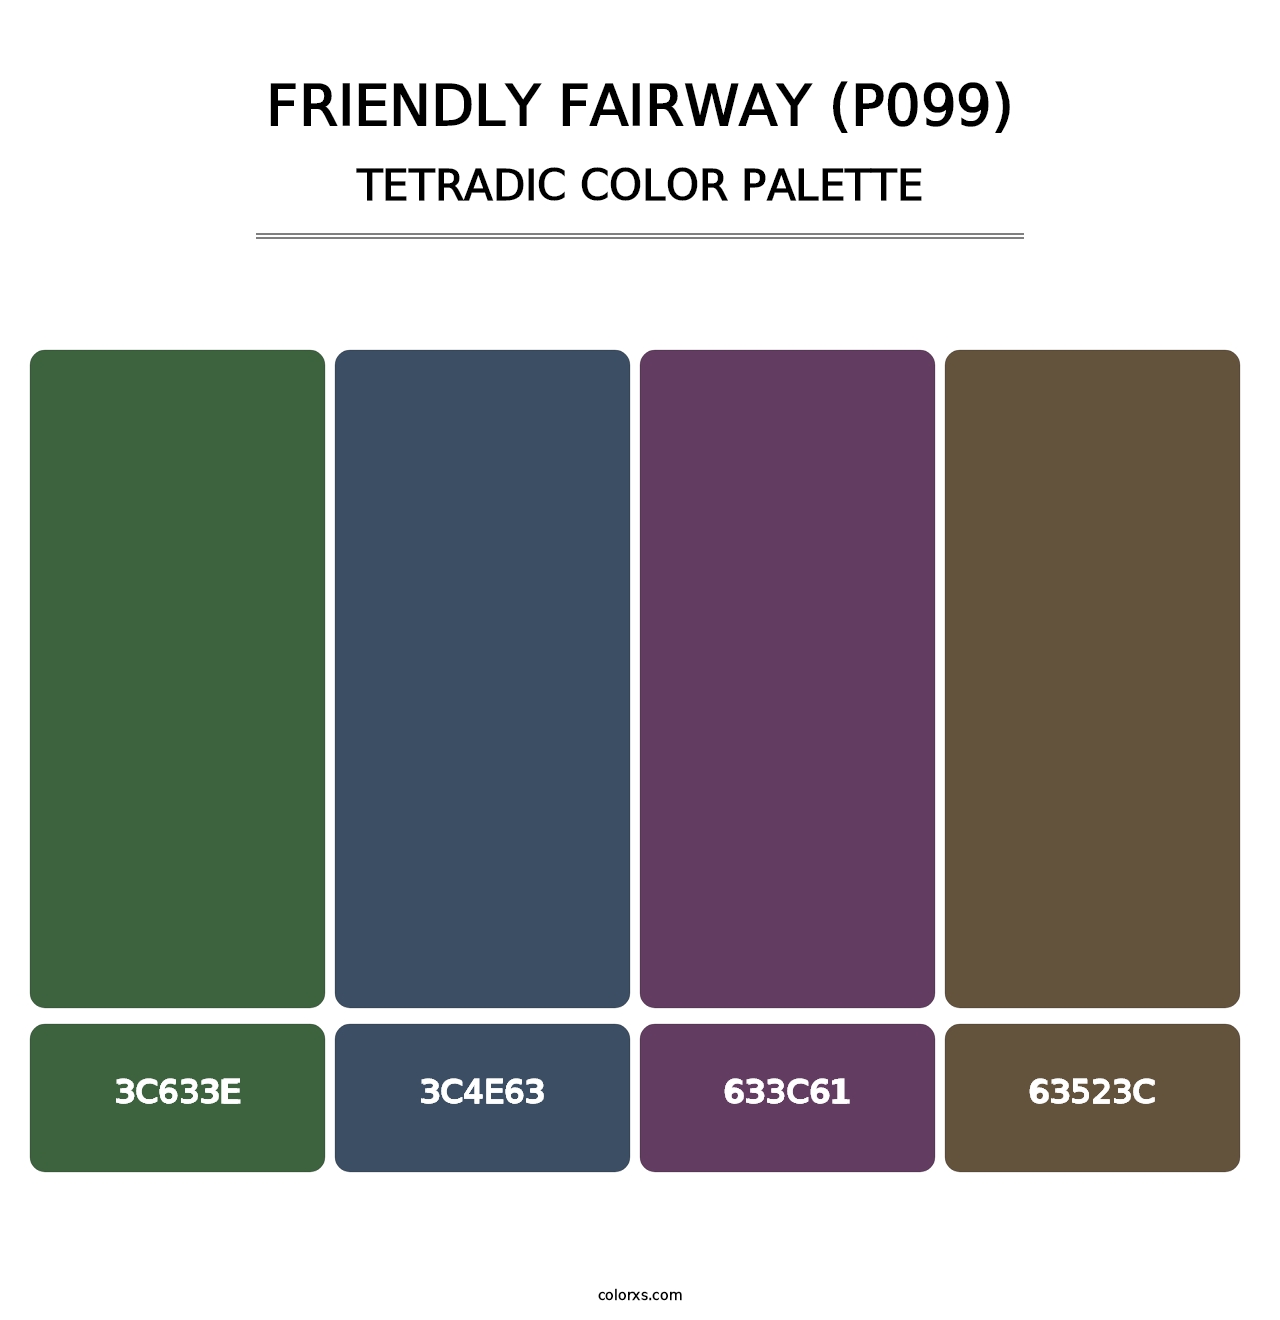 Friendly Fairway (P099) - Tetradic Color Palette